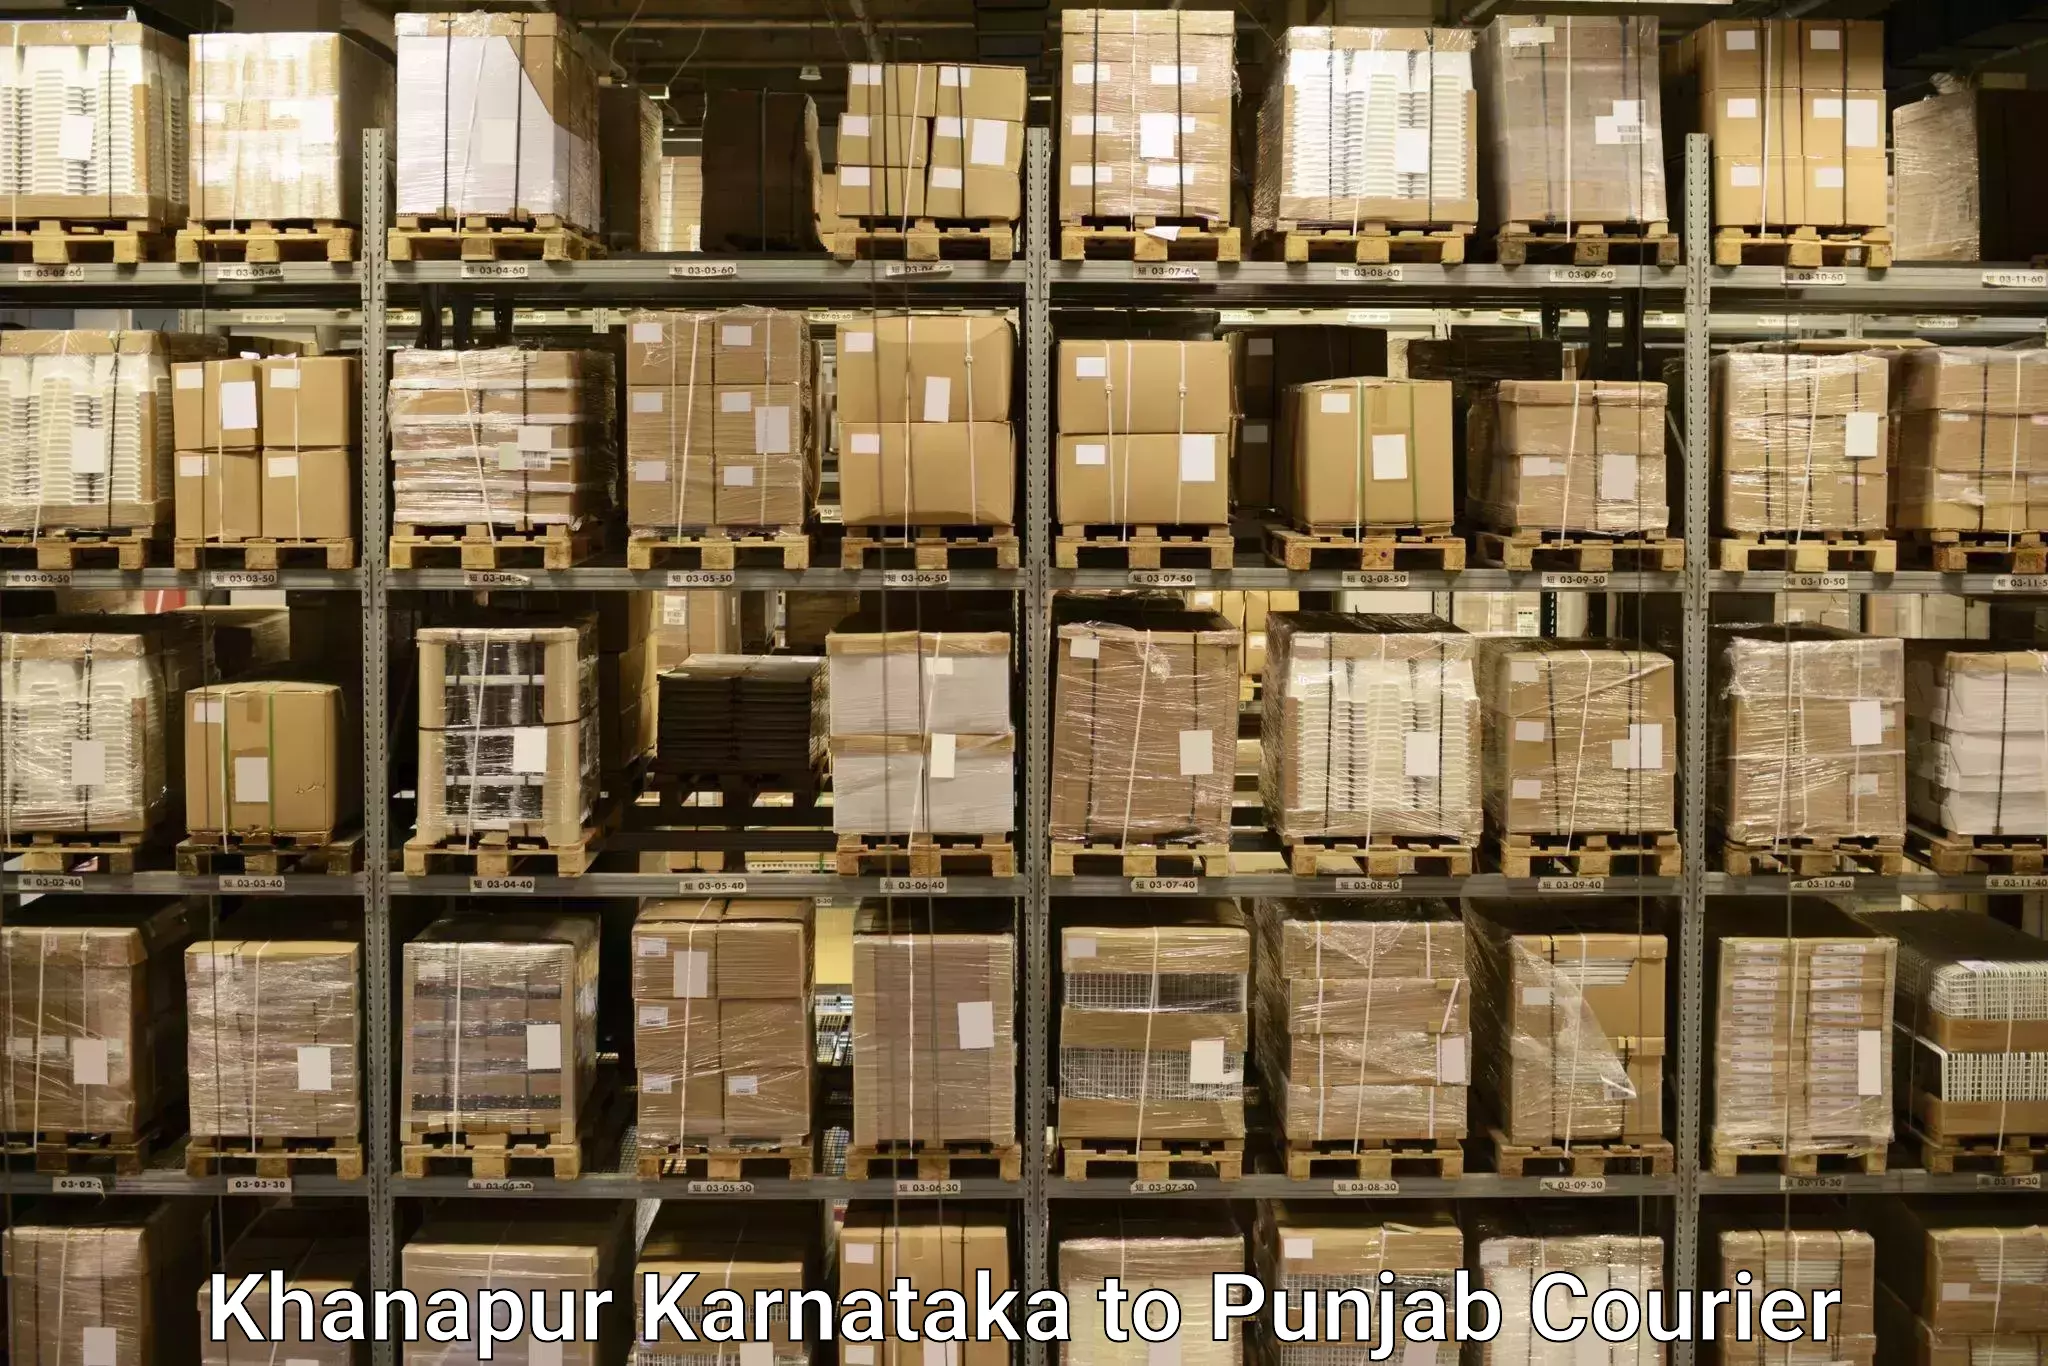 Luggage delivery providers Khanapur Karnataka to Dera Bassi